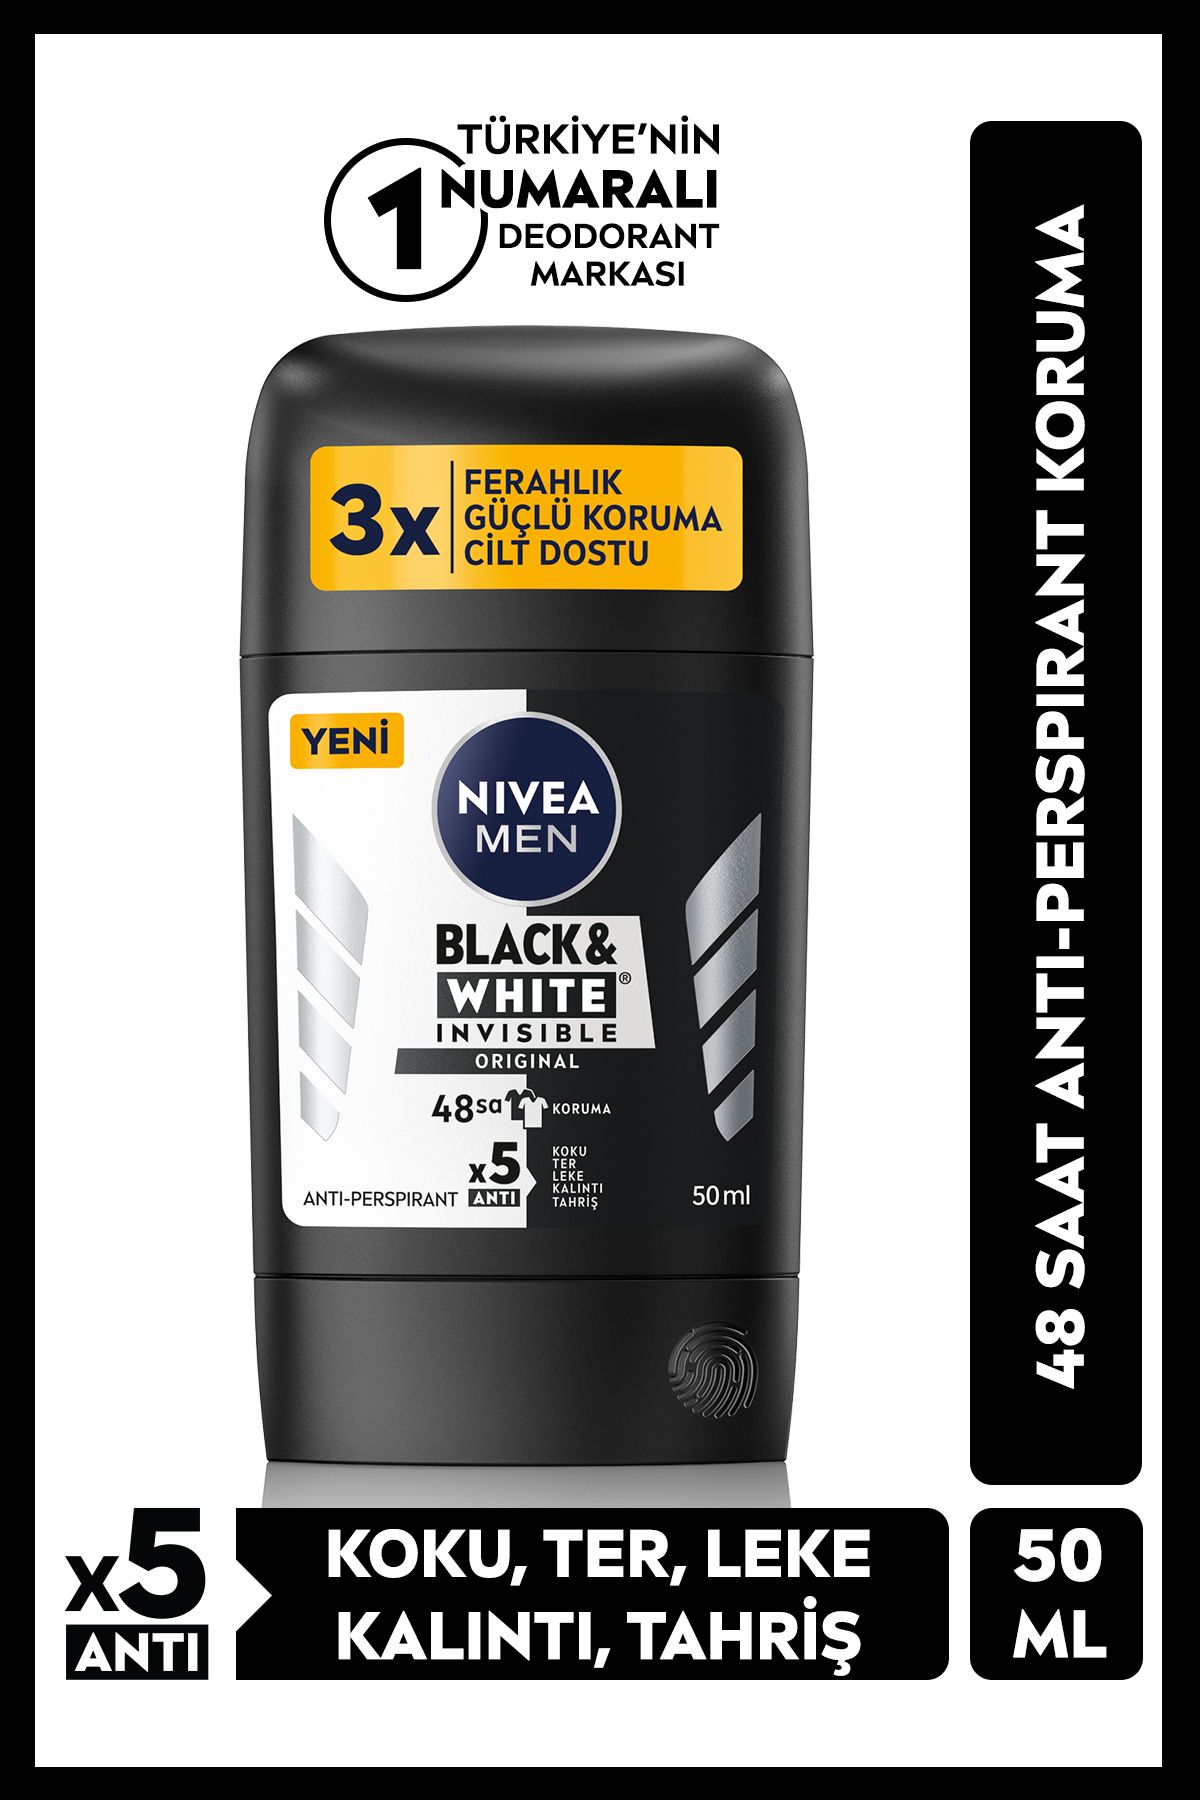 NIVEA Men Erkek Stick Deodorant Black&white Invisible Original 50 Ml, Ter Kokusuna Karşı 48 Saat Koruma